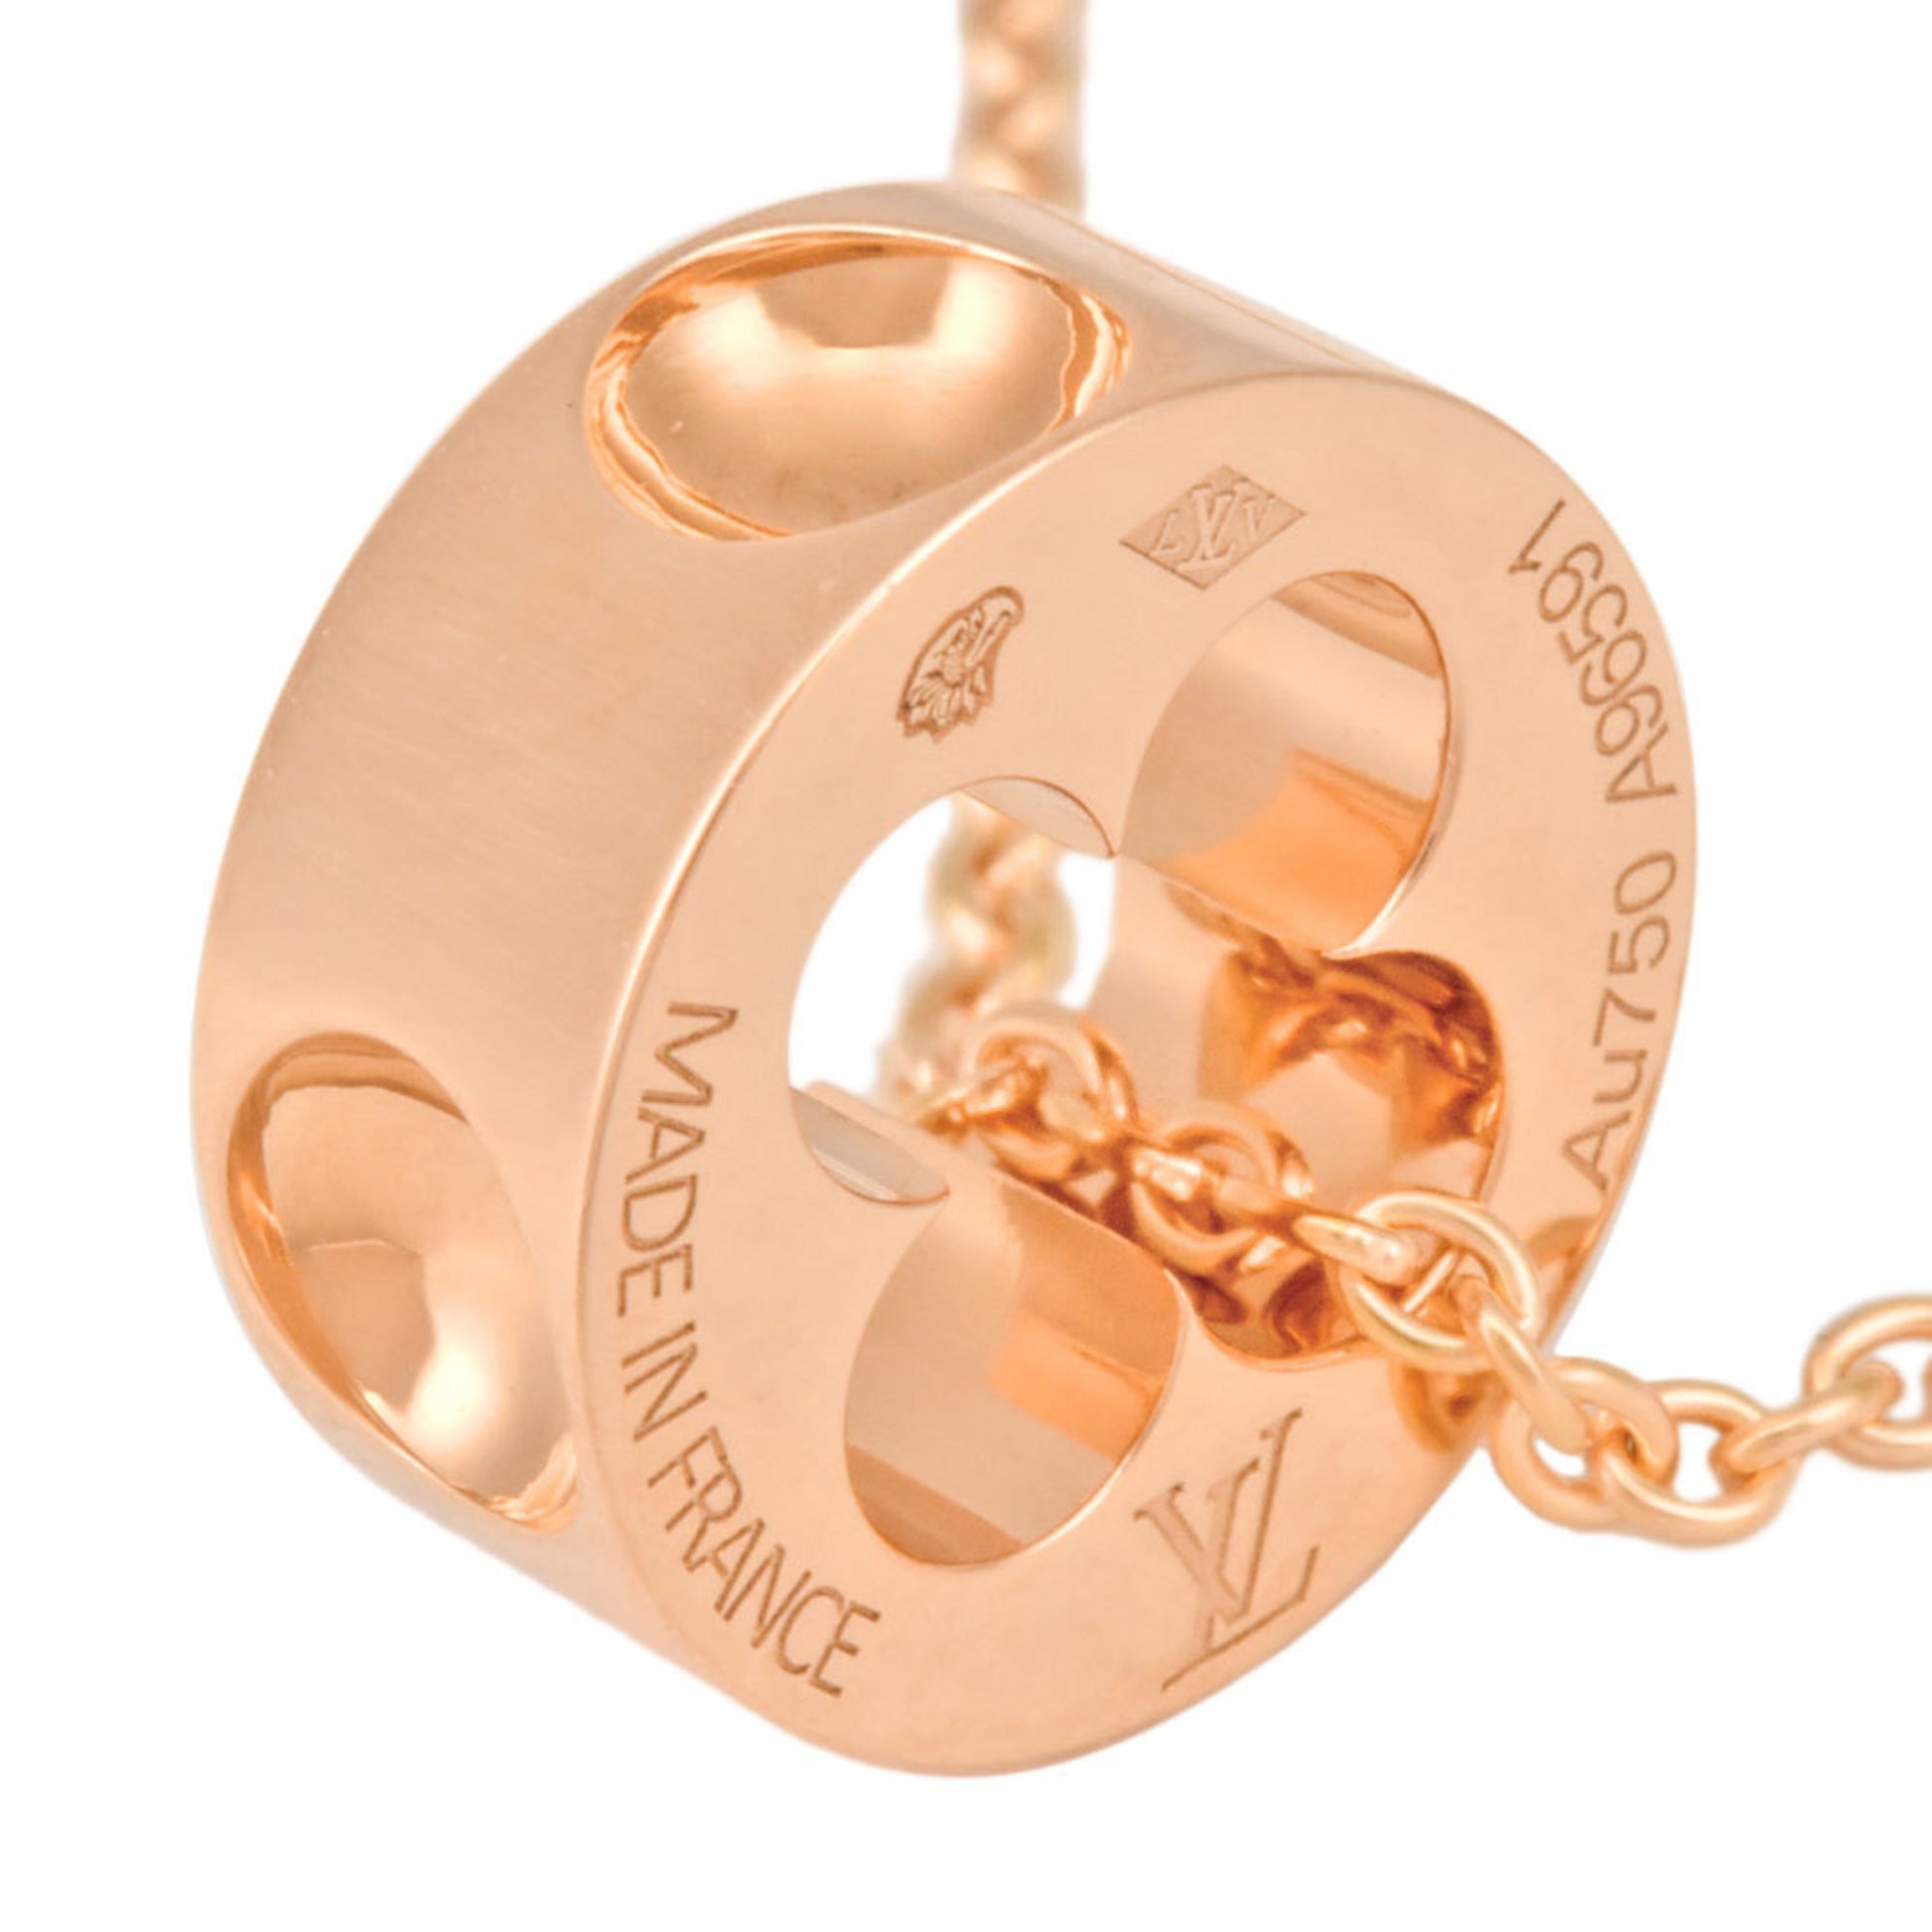 Louis Vuitton Medallion Empreinte Necklace Gold Q93823 18K Yellow Gold